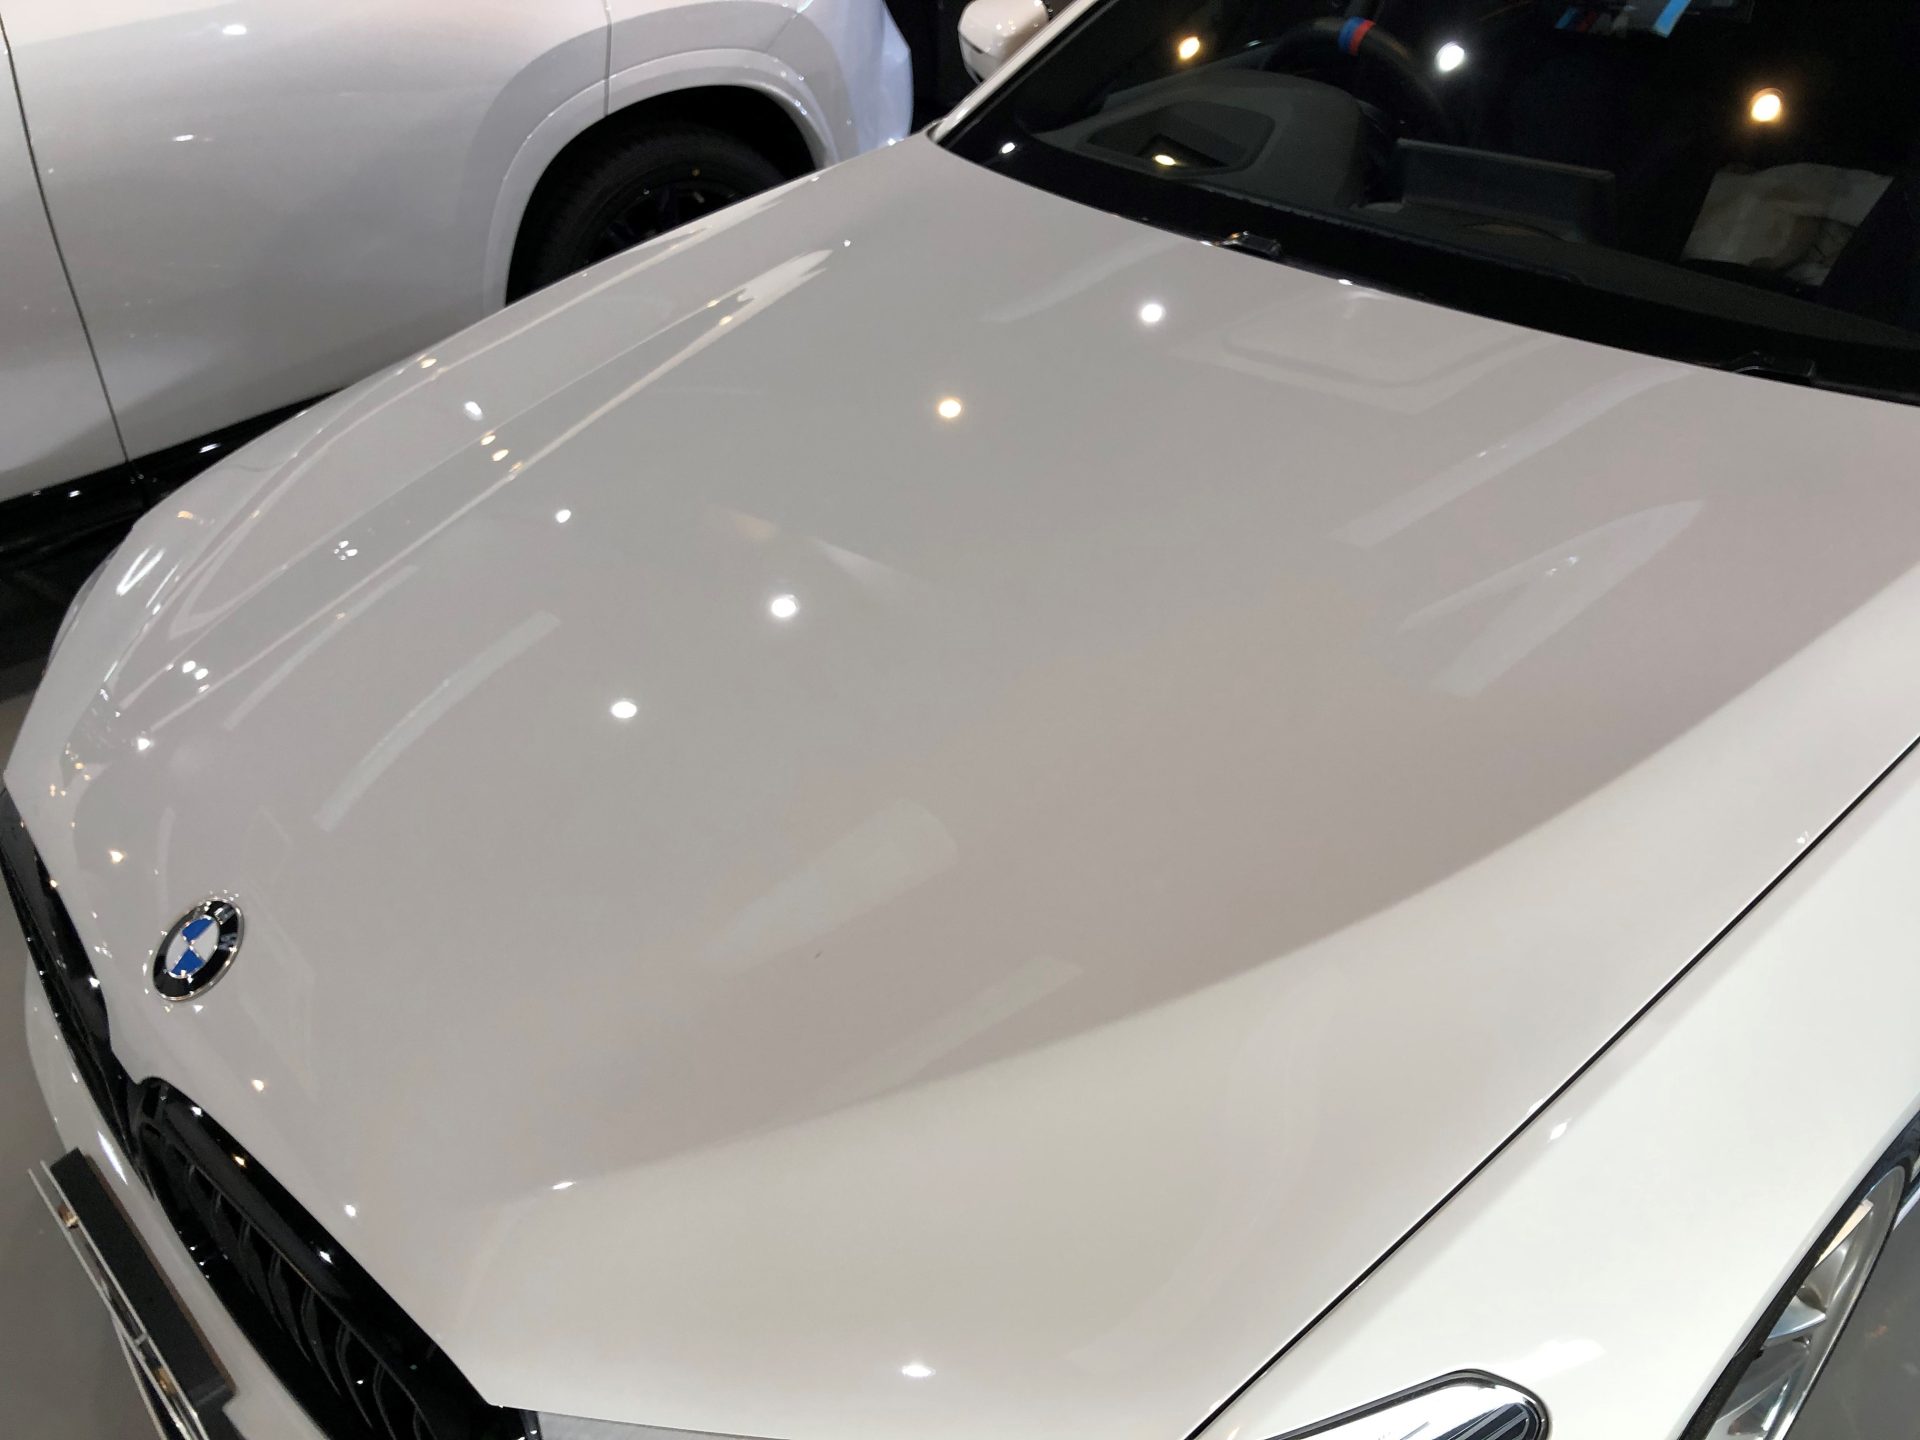 BMW 523d ナノクリスタルプロガラスコーティング 艶 シミ除去